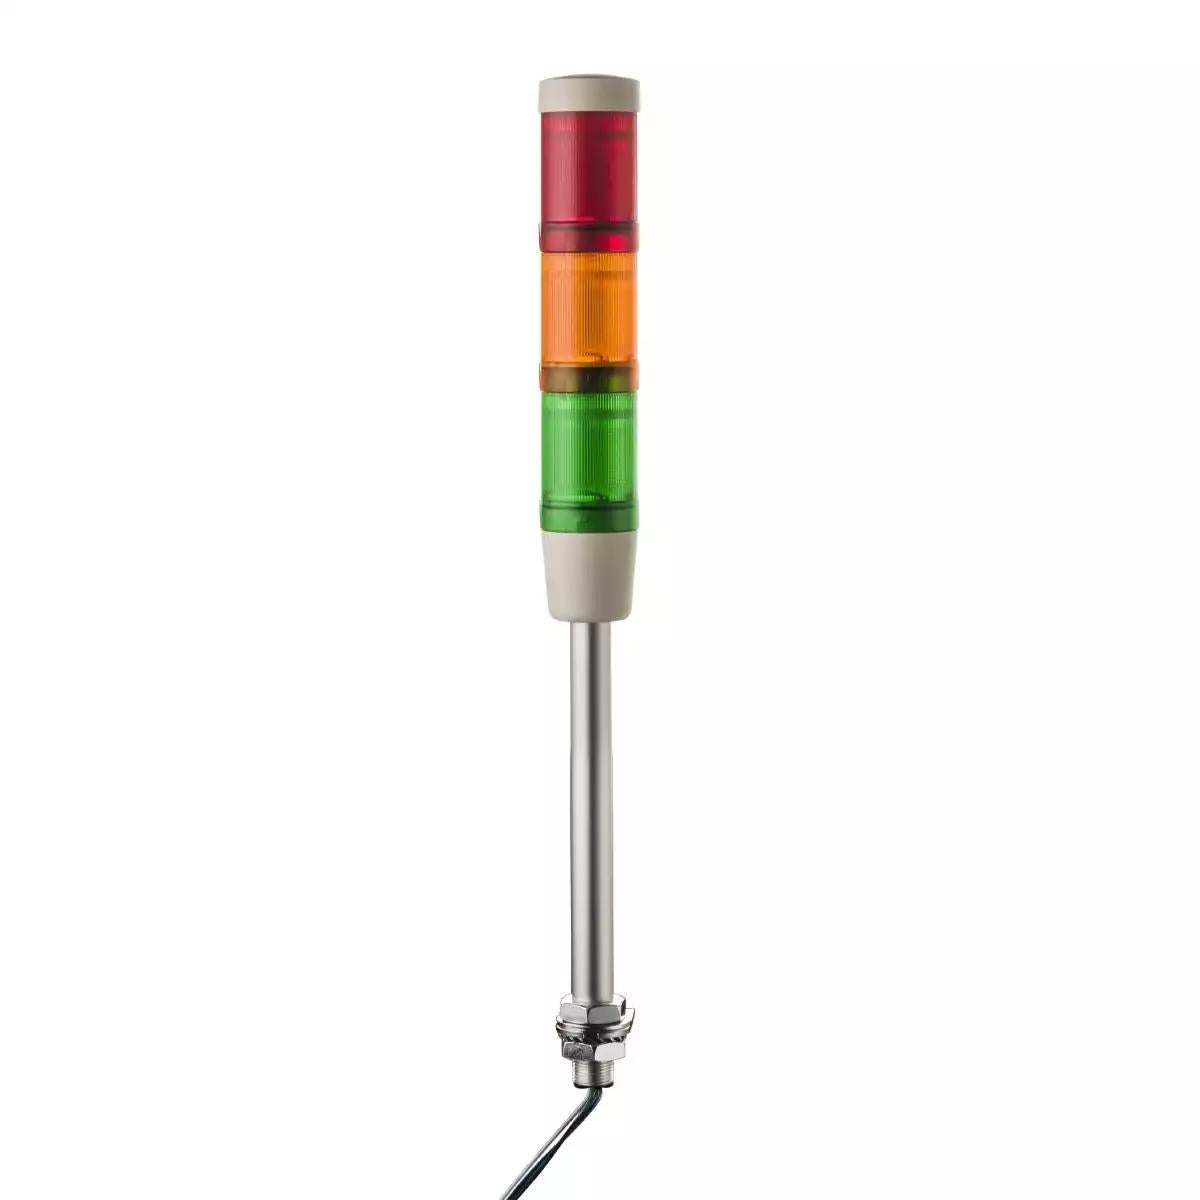 Schneider Electric Modular tower lights, aluminium, red/orange/green, Ã˜45, steady, super bright LED, 24 V AC/DC